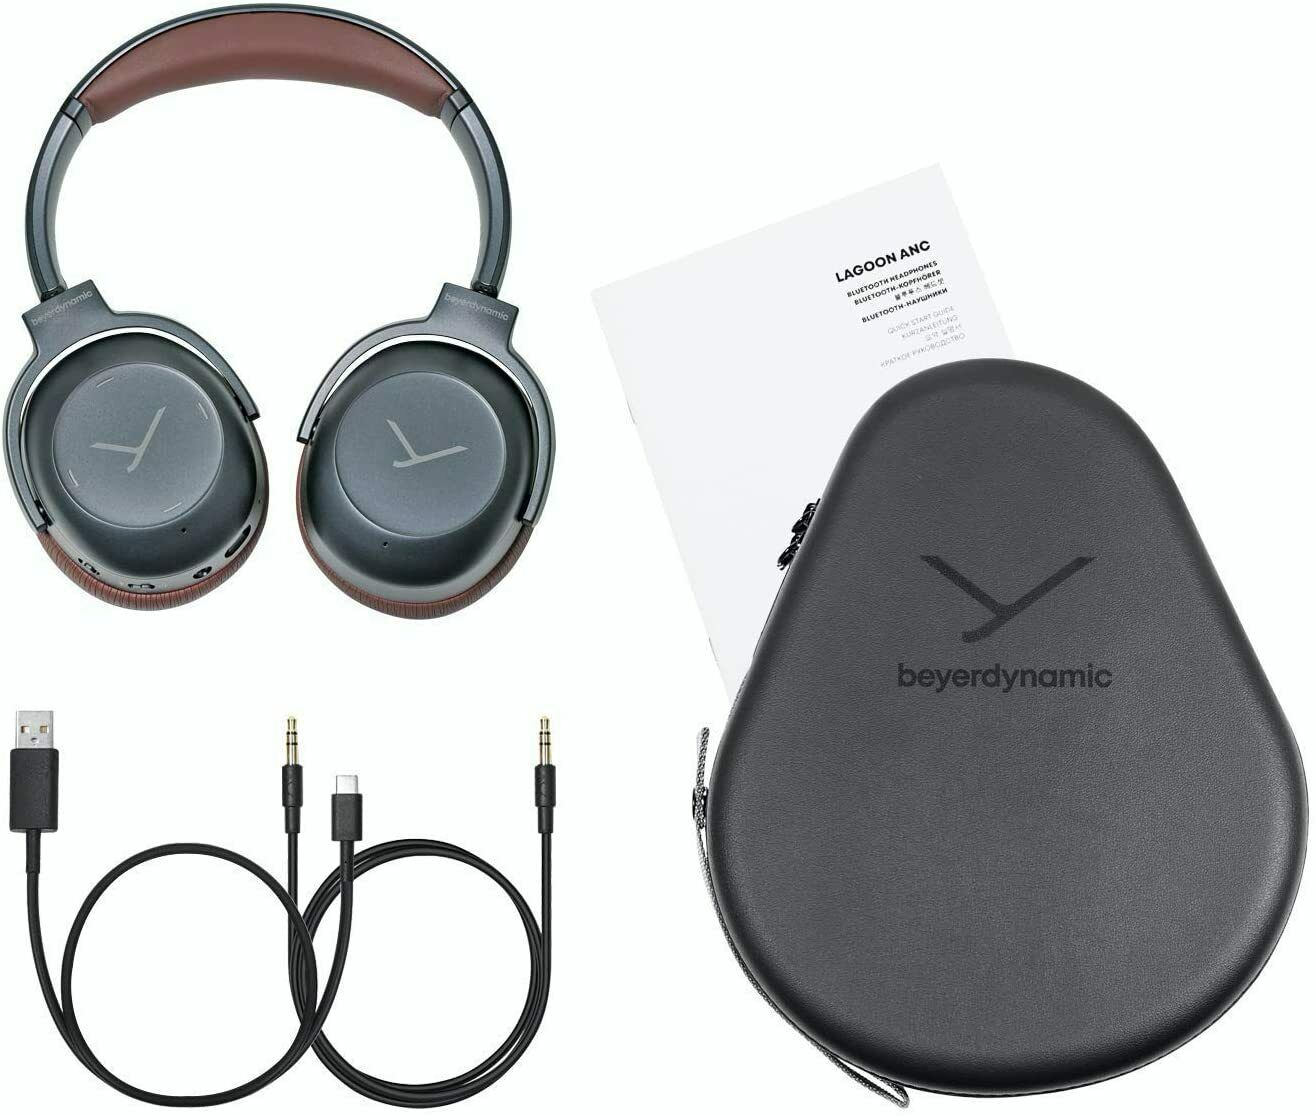 Beyerdynamic LAGOON ANC Explorer Bluetooth headphones with ANC 8236